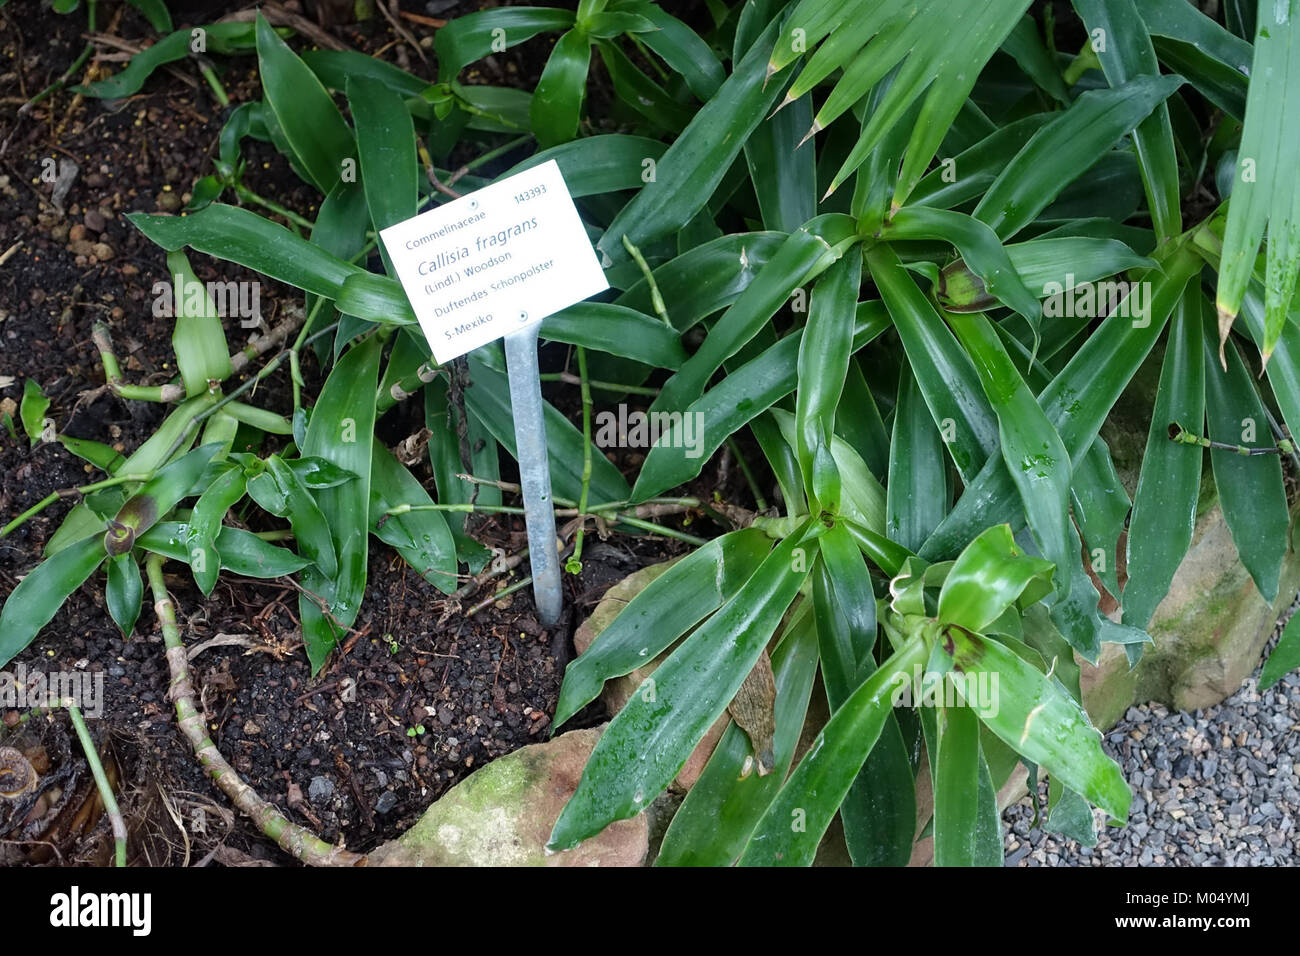 Callisia fragrans - Botanischer Garten - Heidelberg, Germany - DSC01094 Stock Photo